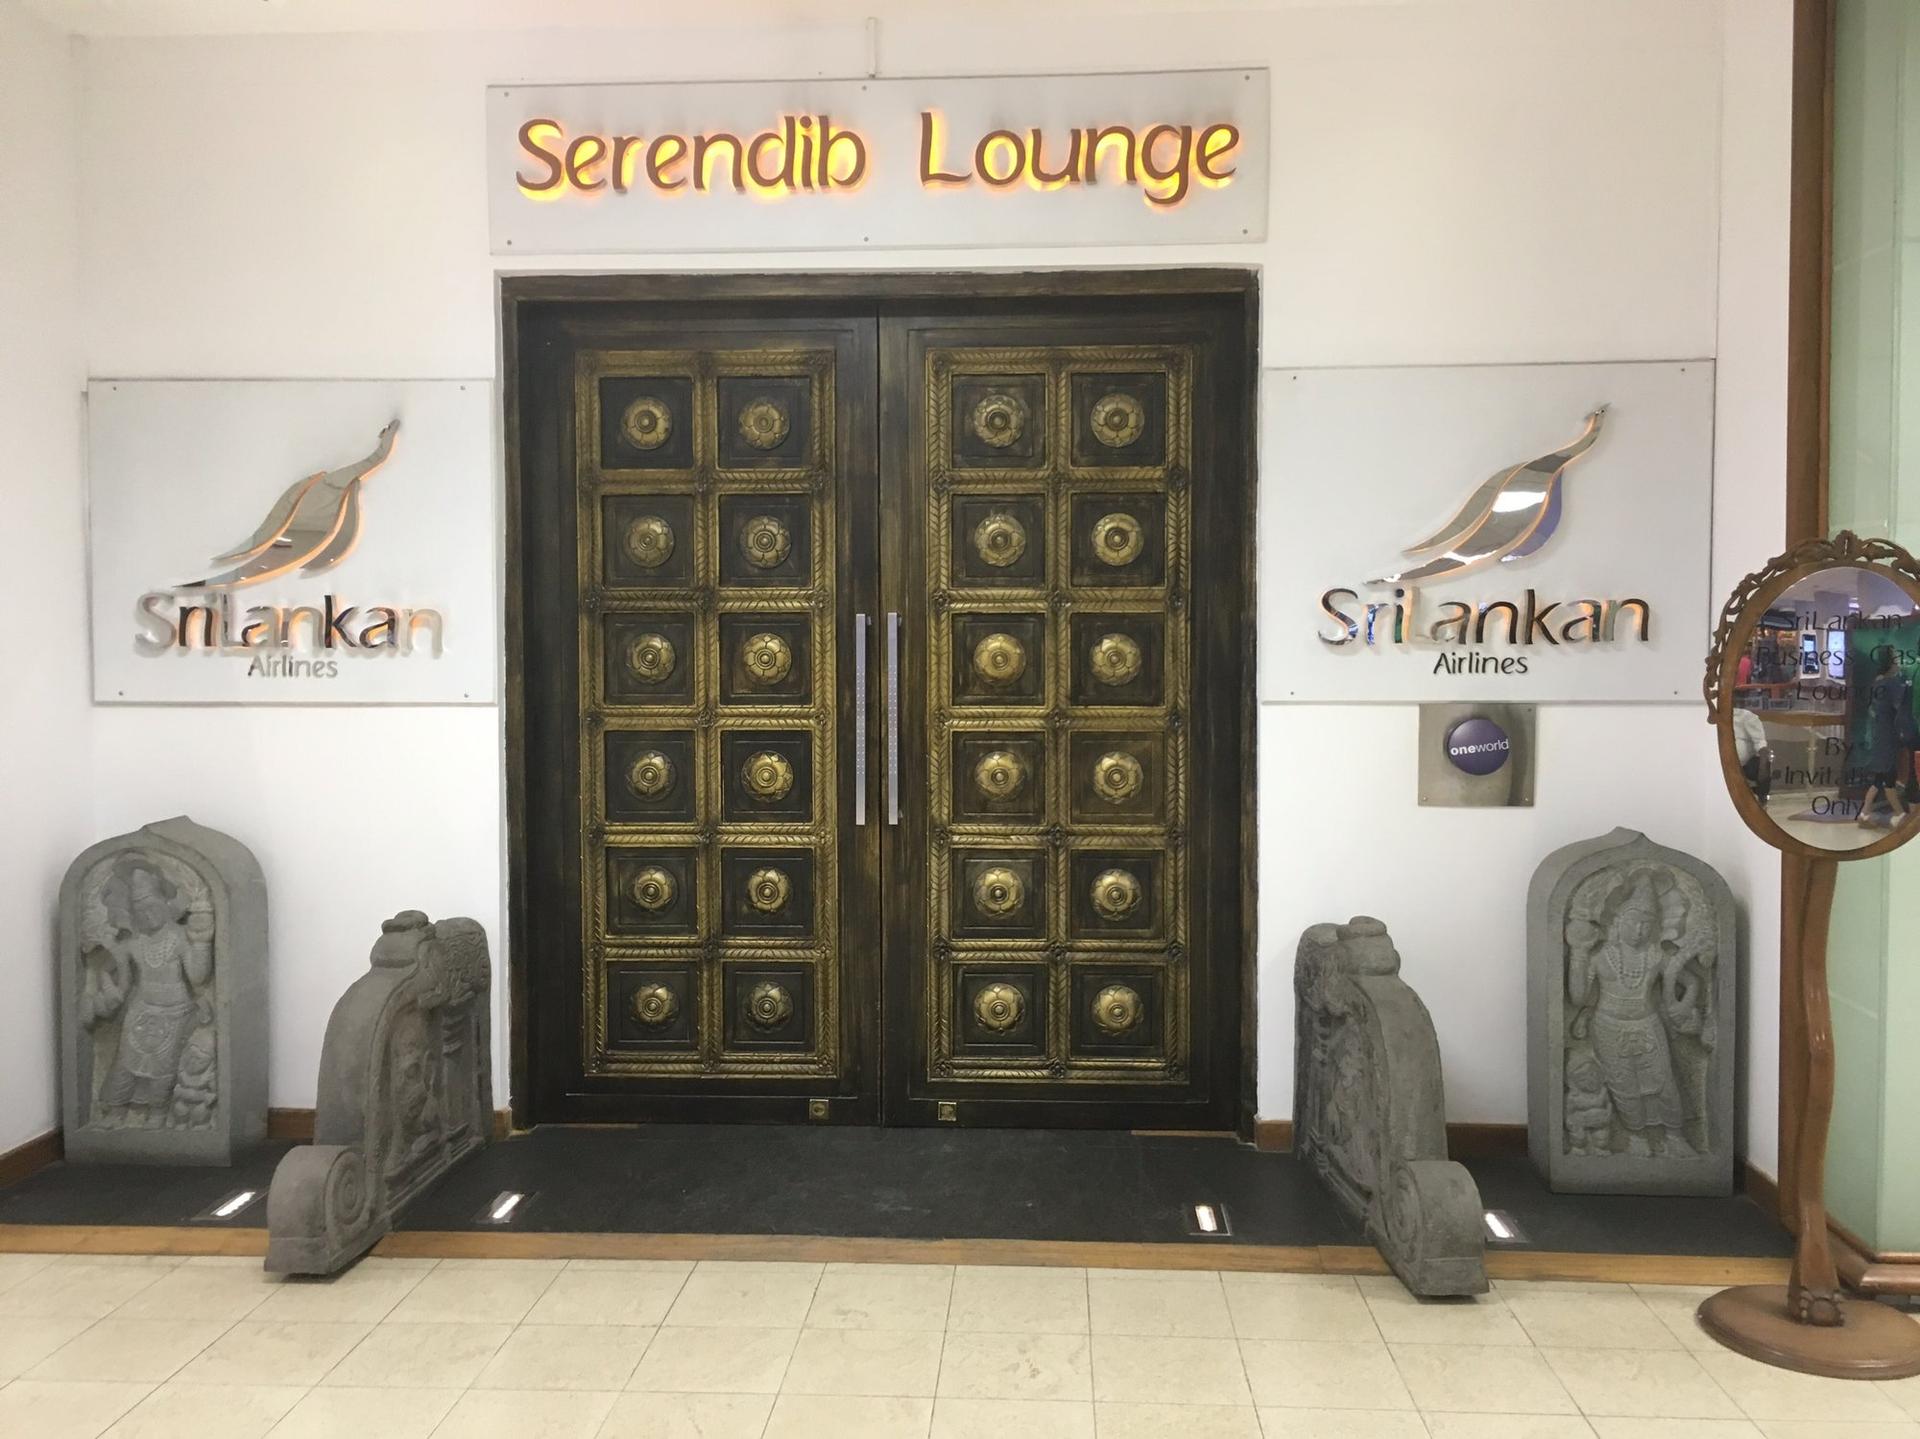 SriLankan Airlines Serendib Lounge image 6 of 14